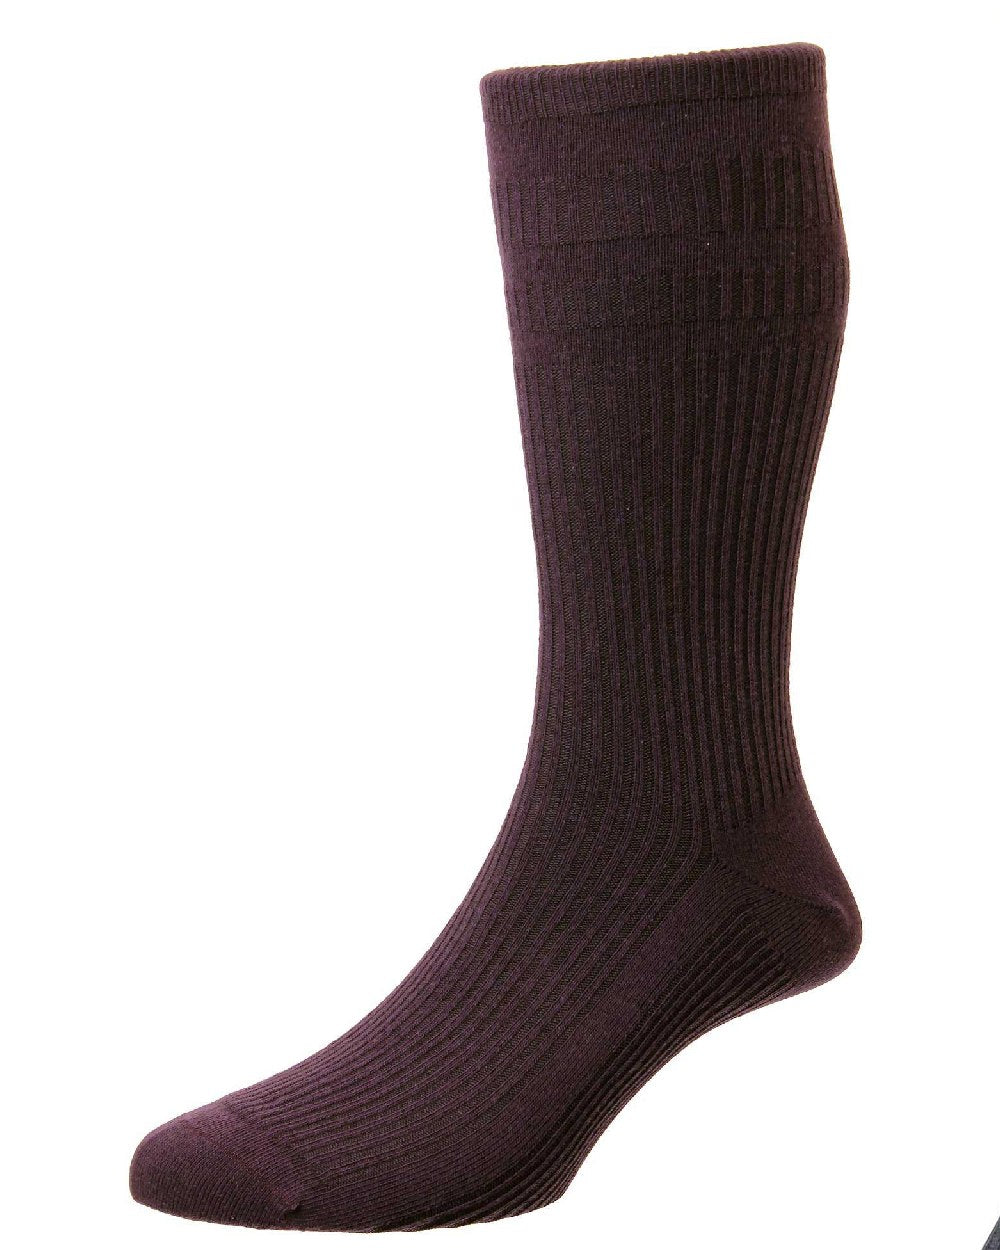 HJ Hall Original Cotton Soft Top Socks